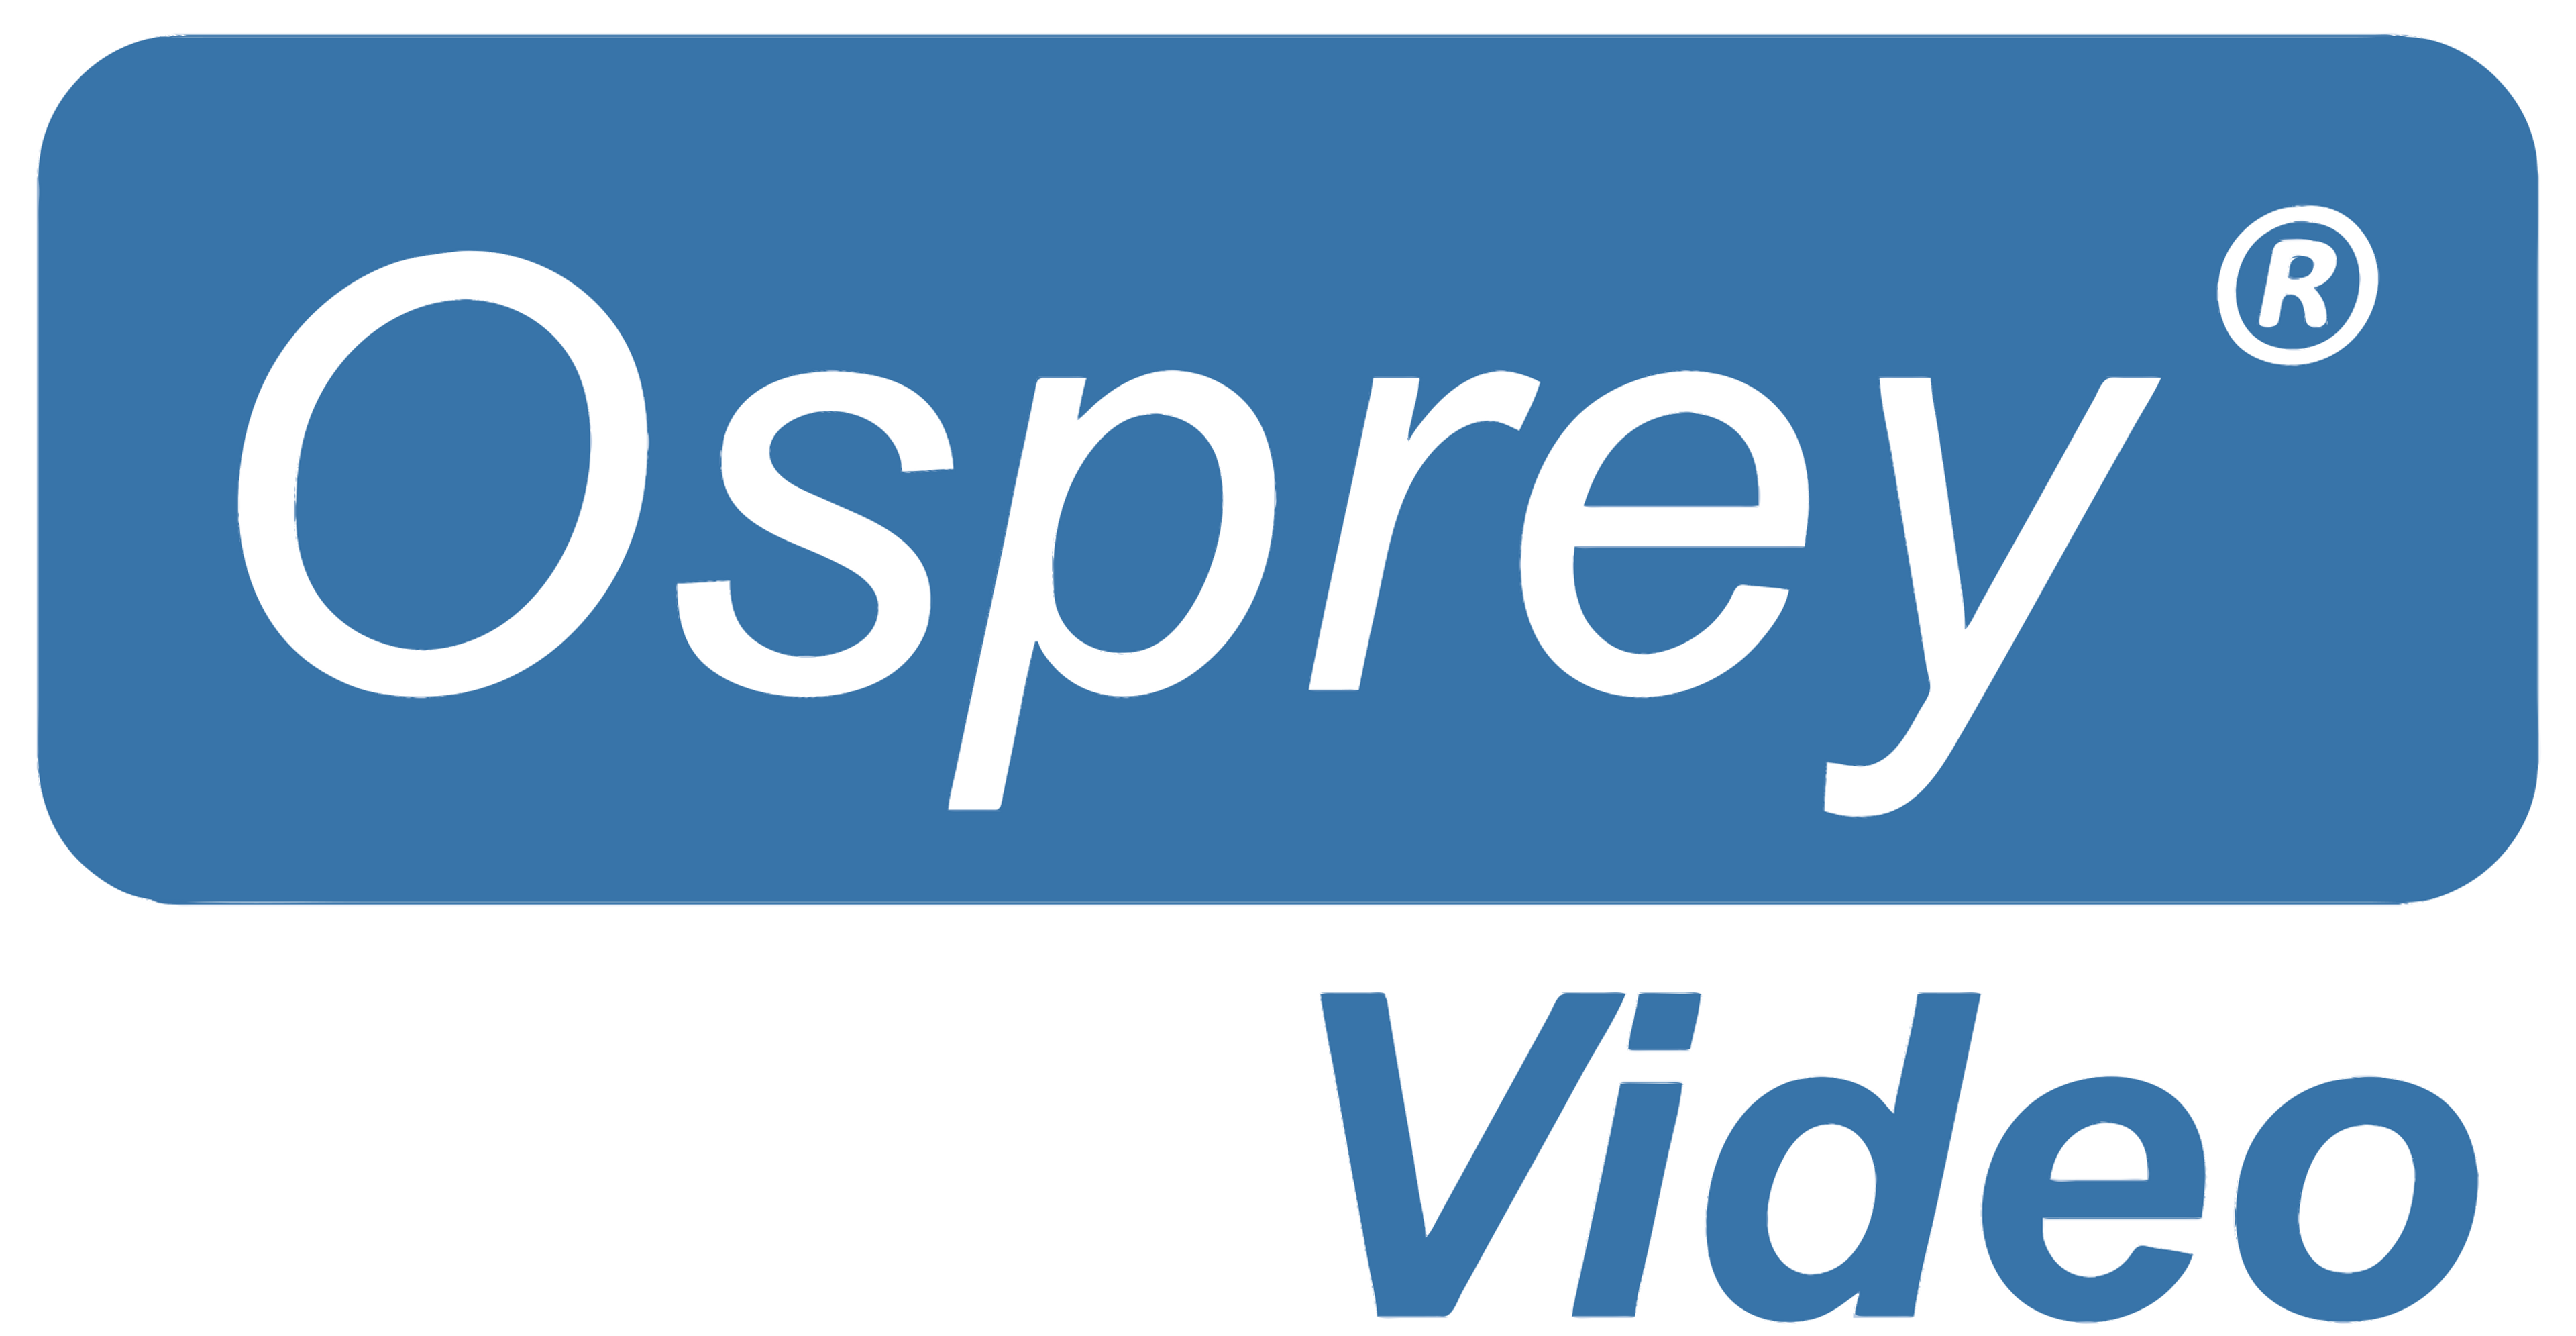 Osprey Video logo